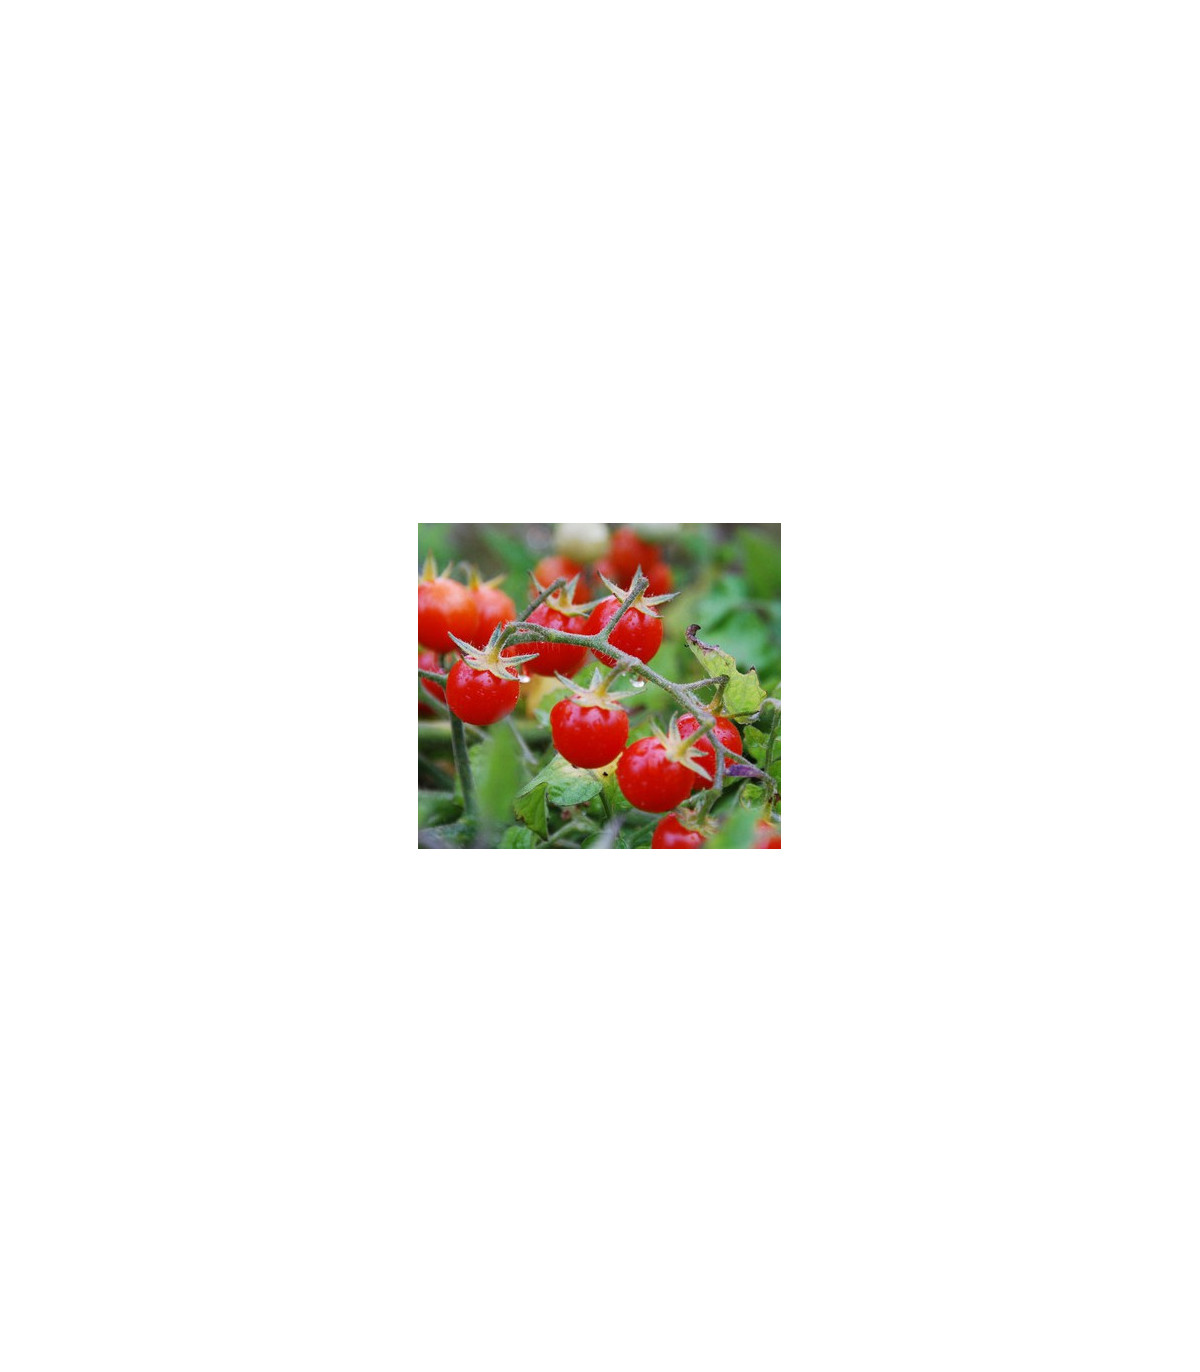 Divá paradajka červená - Lycopersicon pimpinellifolium - semená paradajok - 6 ks